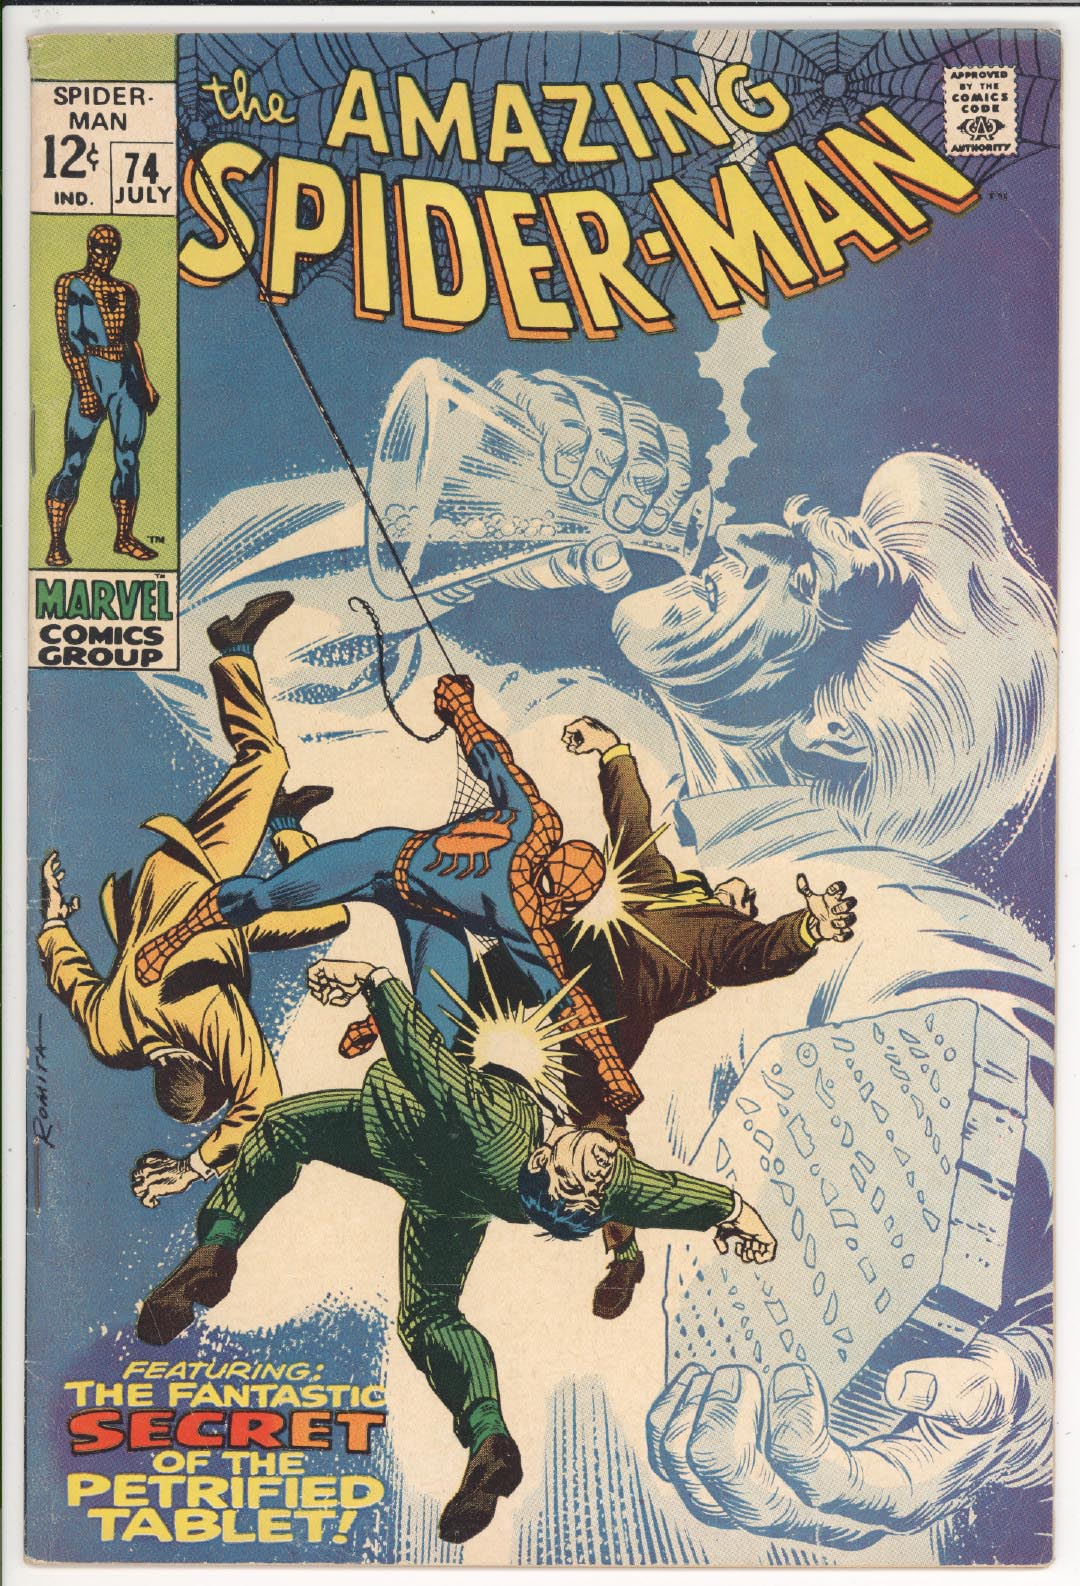 Amazing Spider-Man #74 front